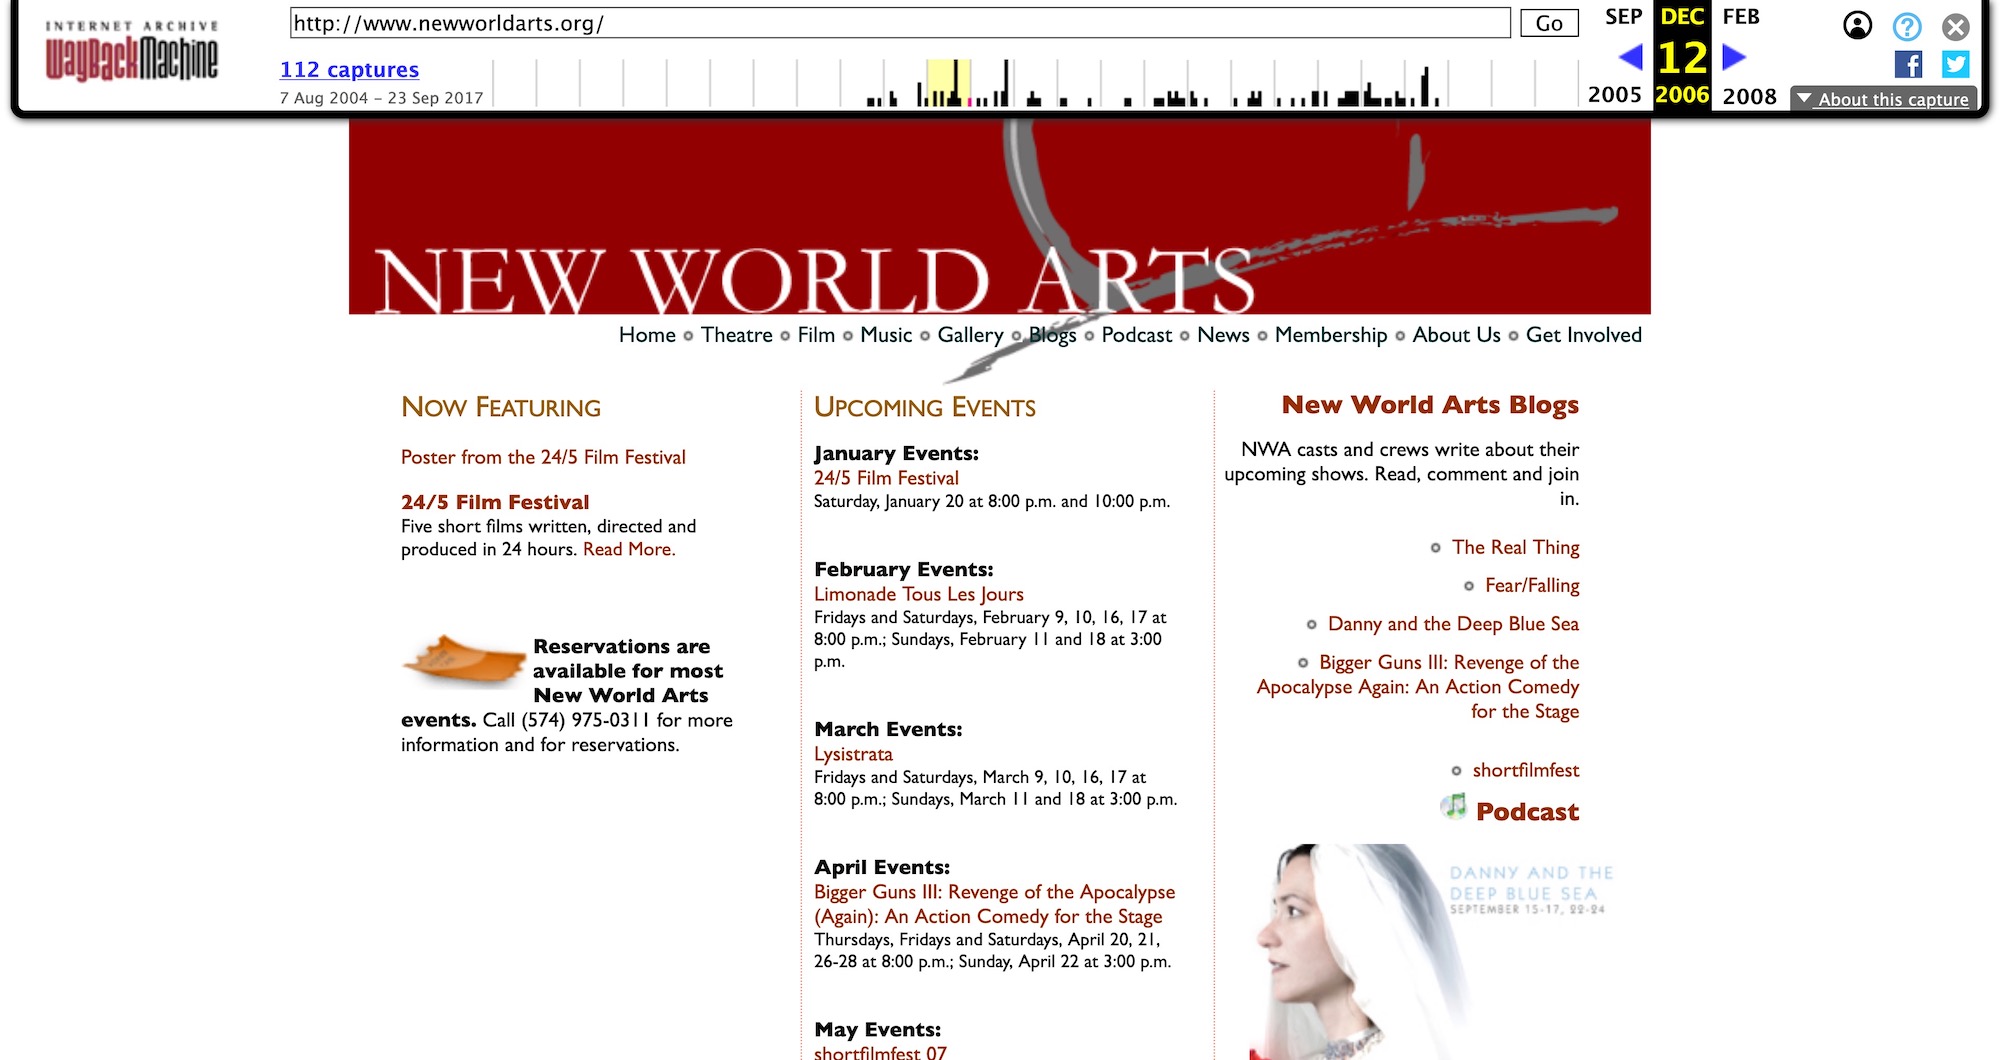 2006 New World Arts website
on the wayback machine
